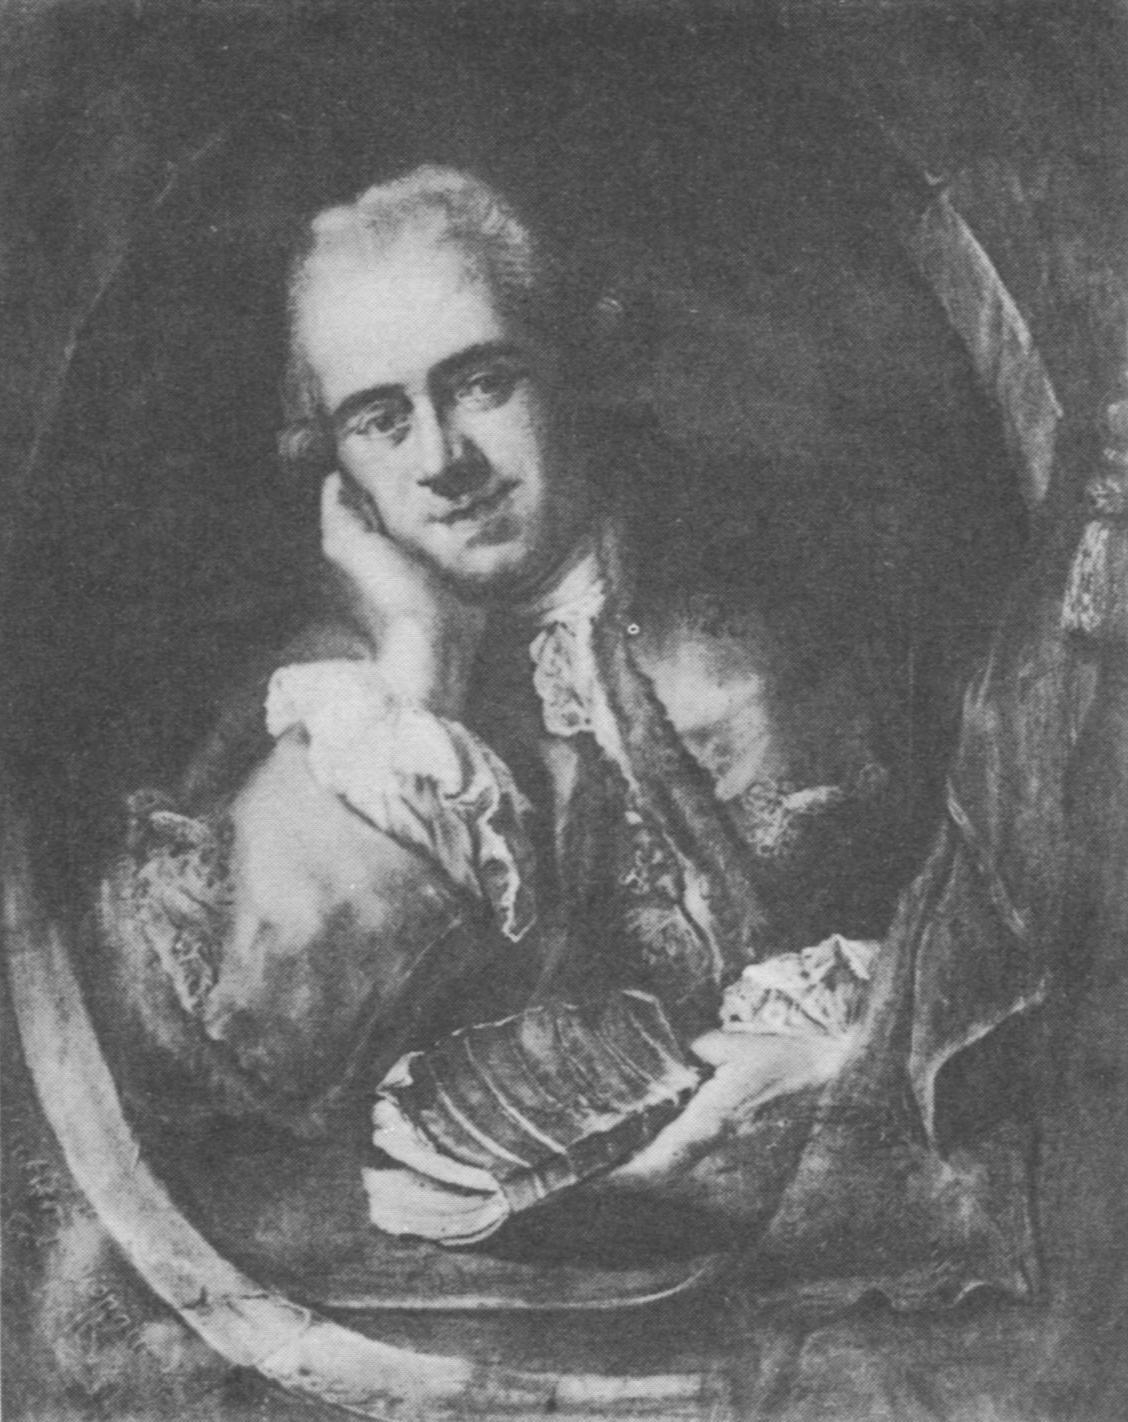 Jean-Baptiste Willermoz